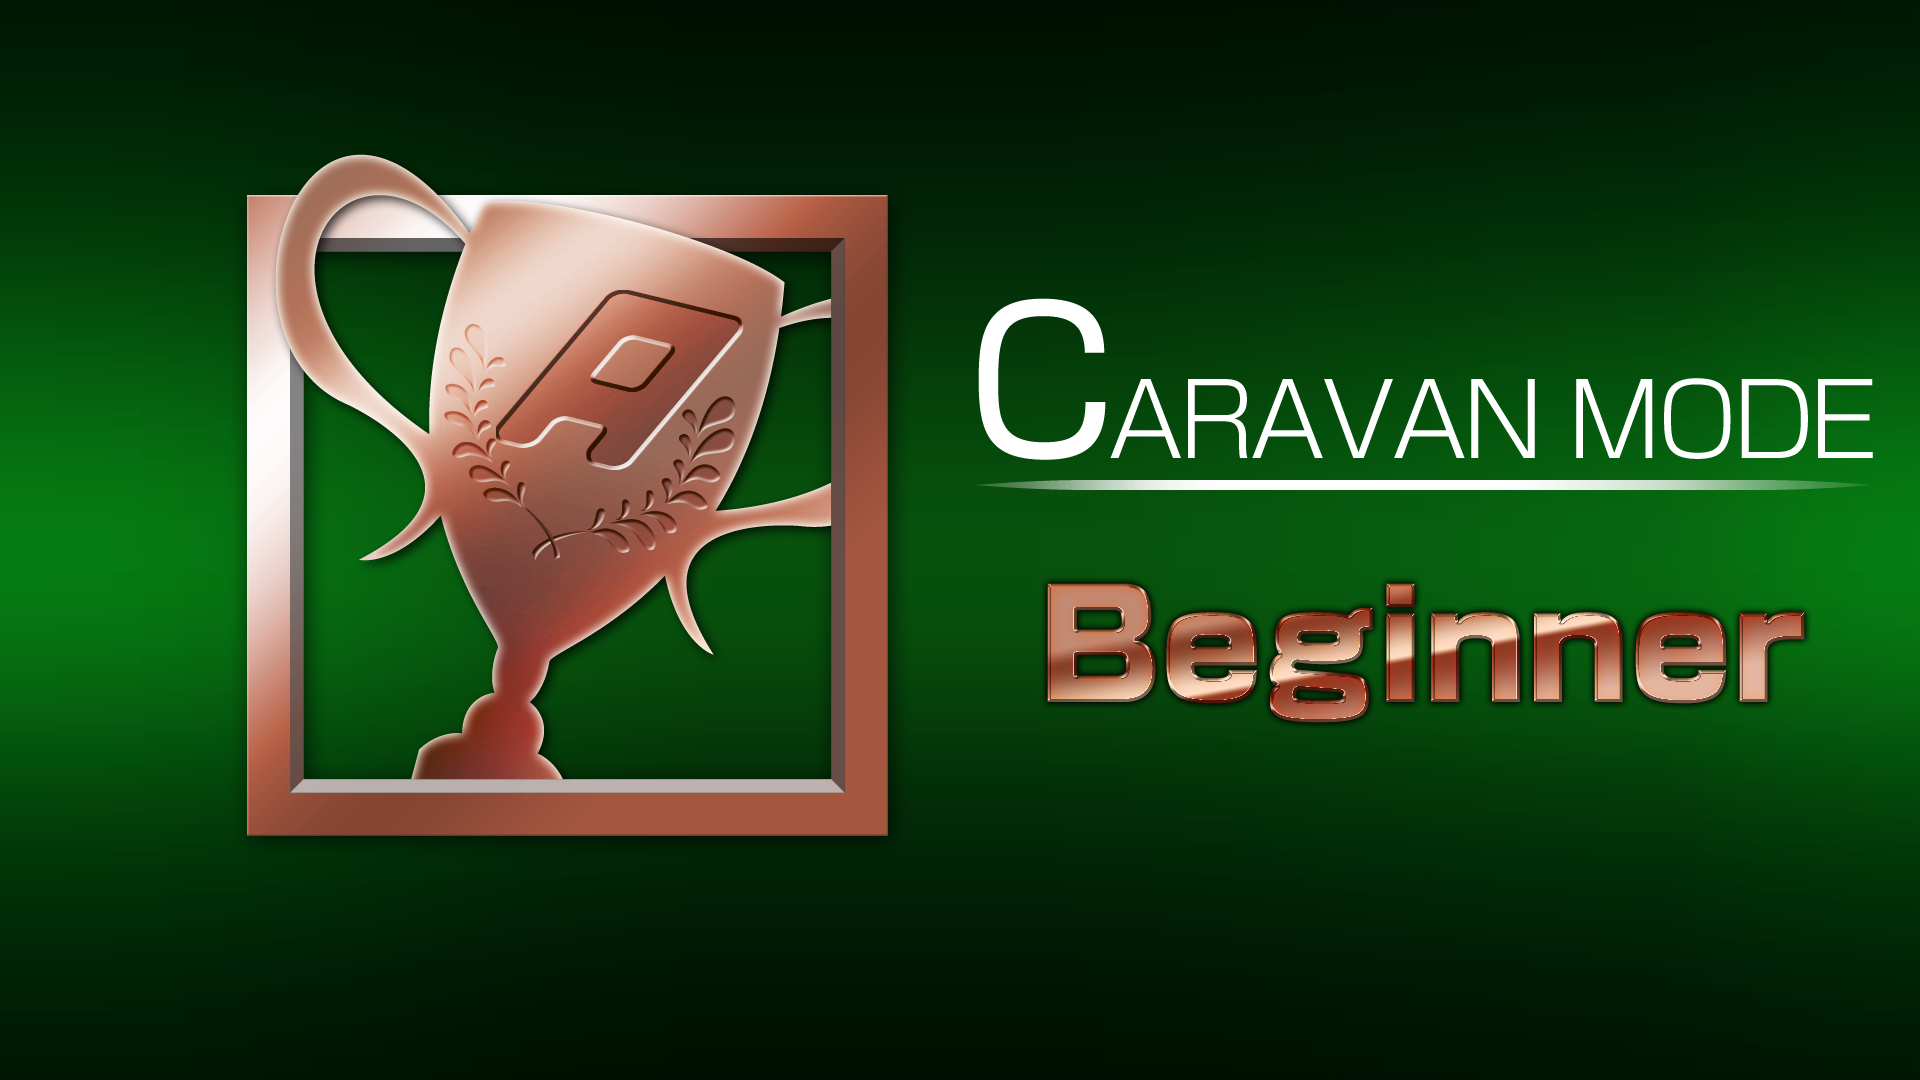 Icon for CARAVAN MODE 3 points